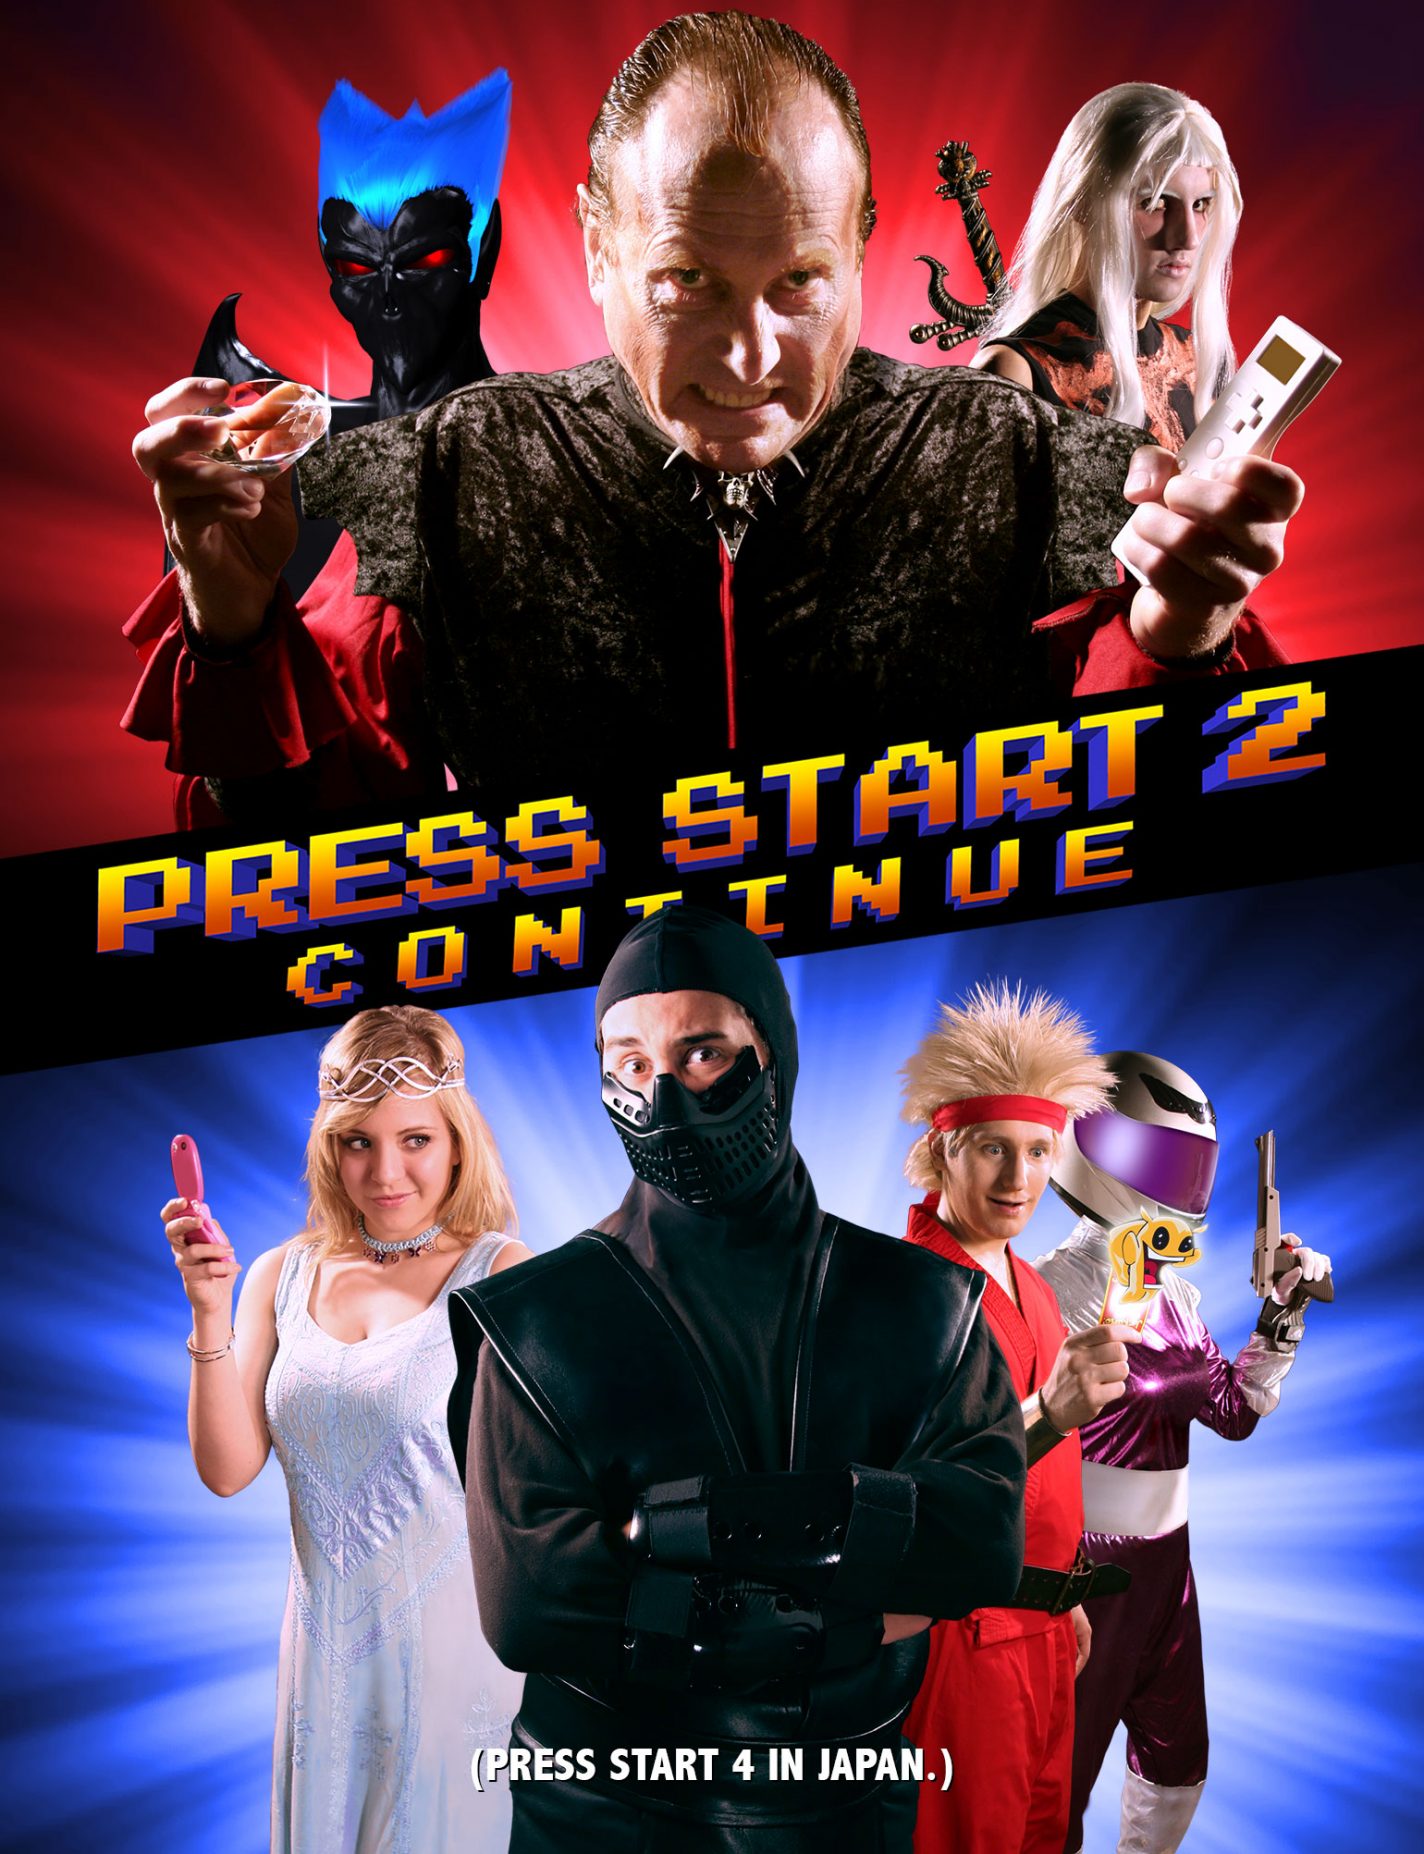 Press Start 2 Continue Poster